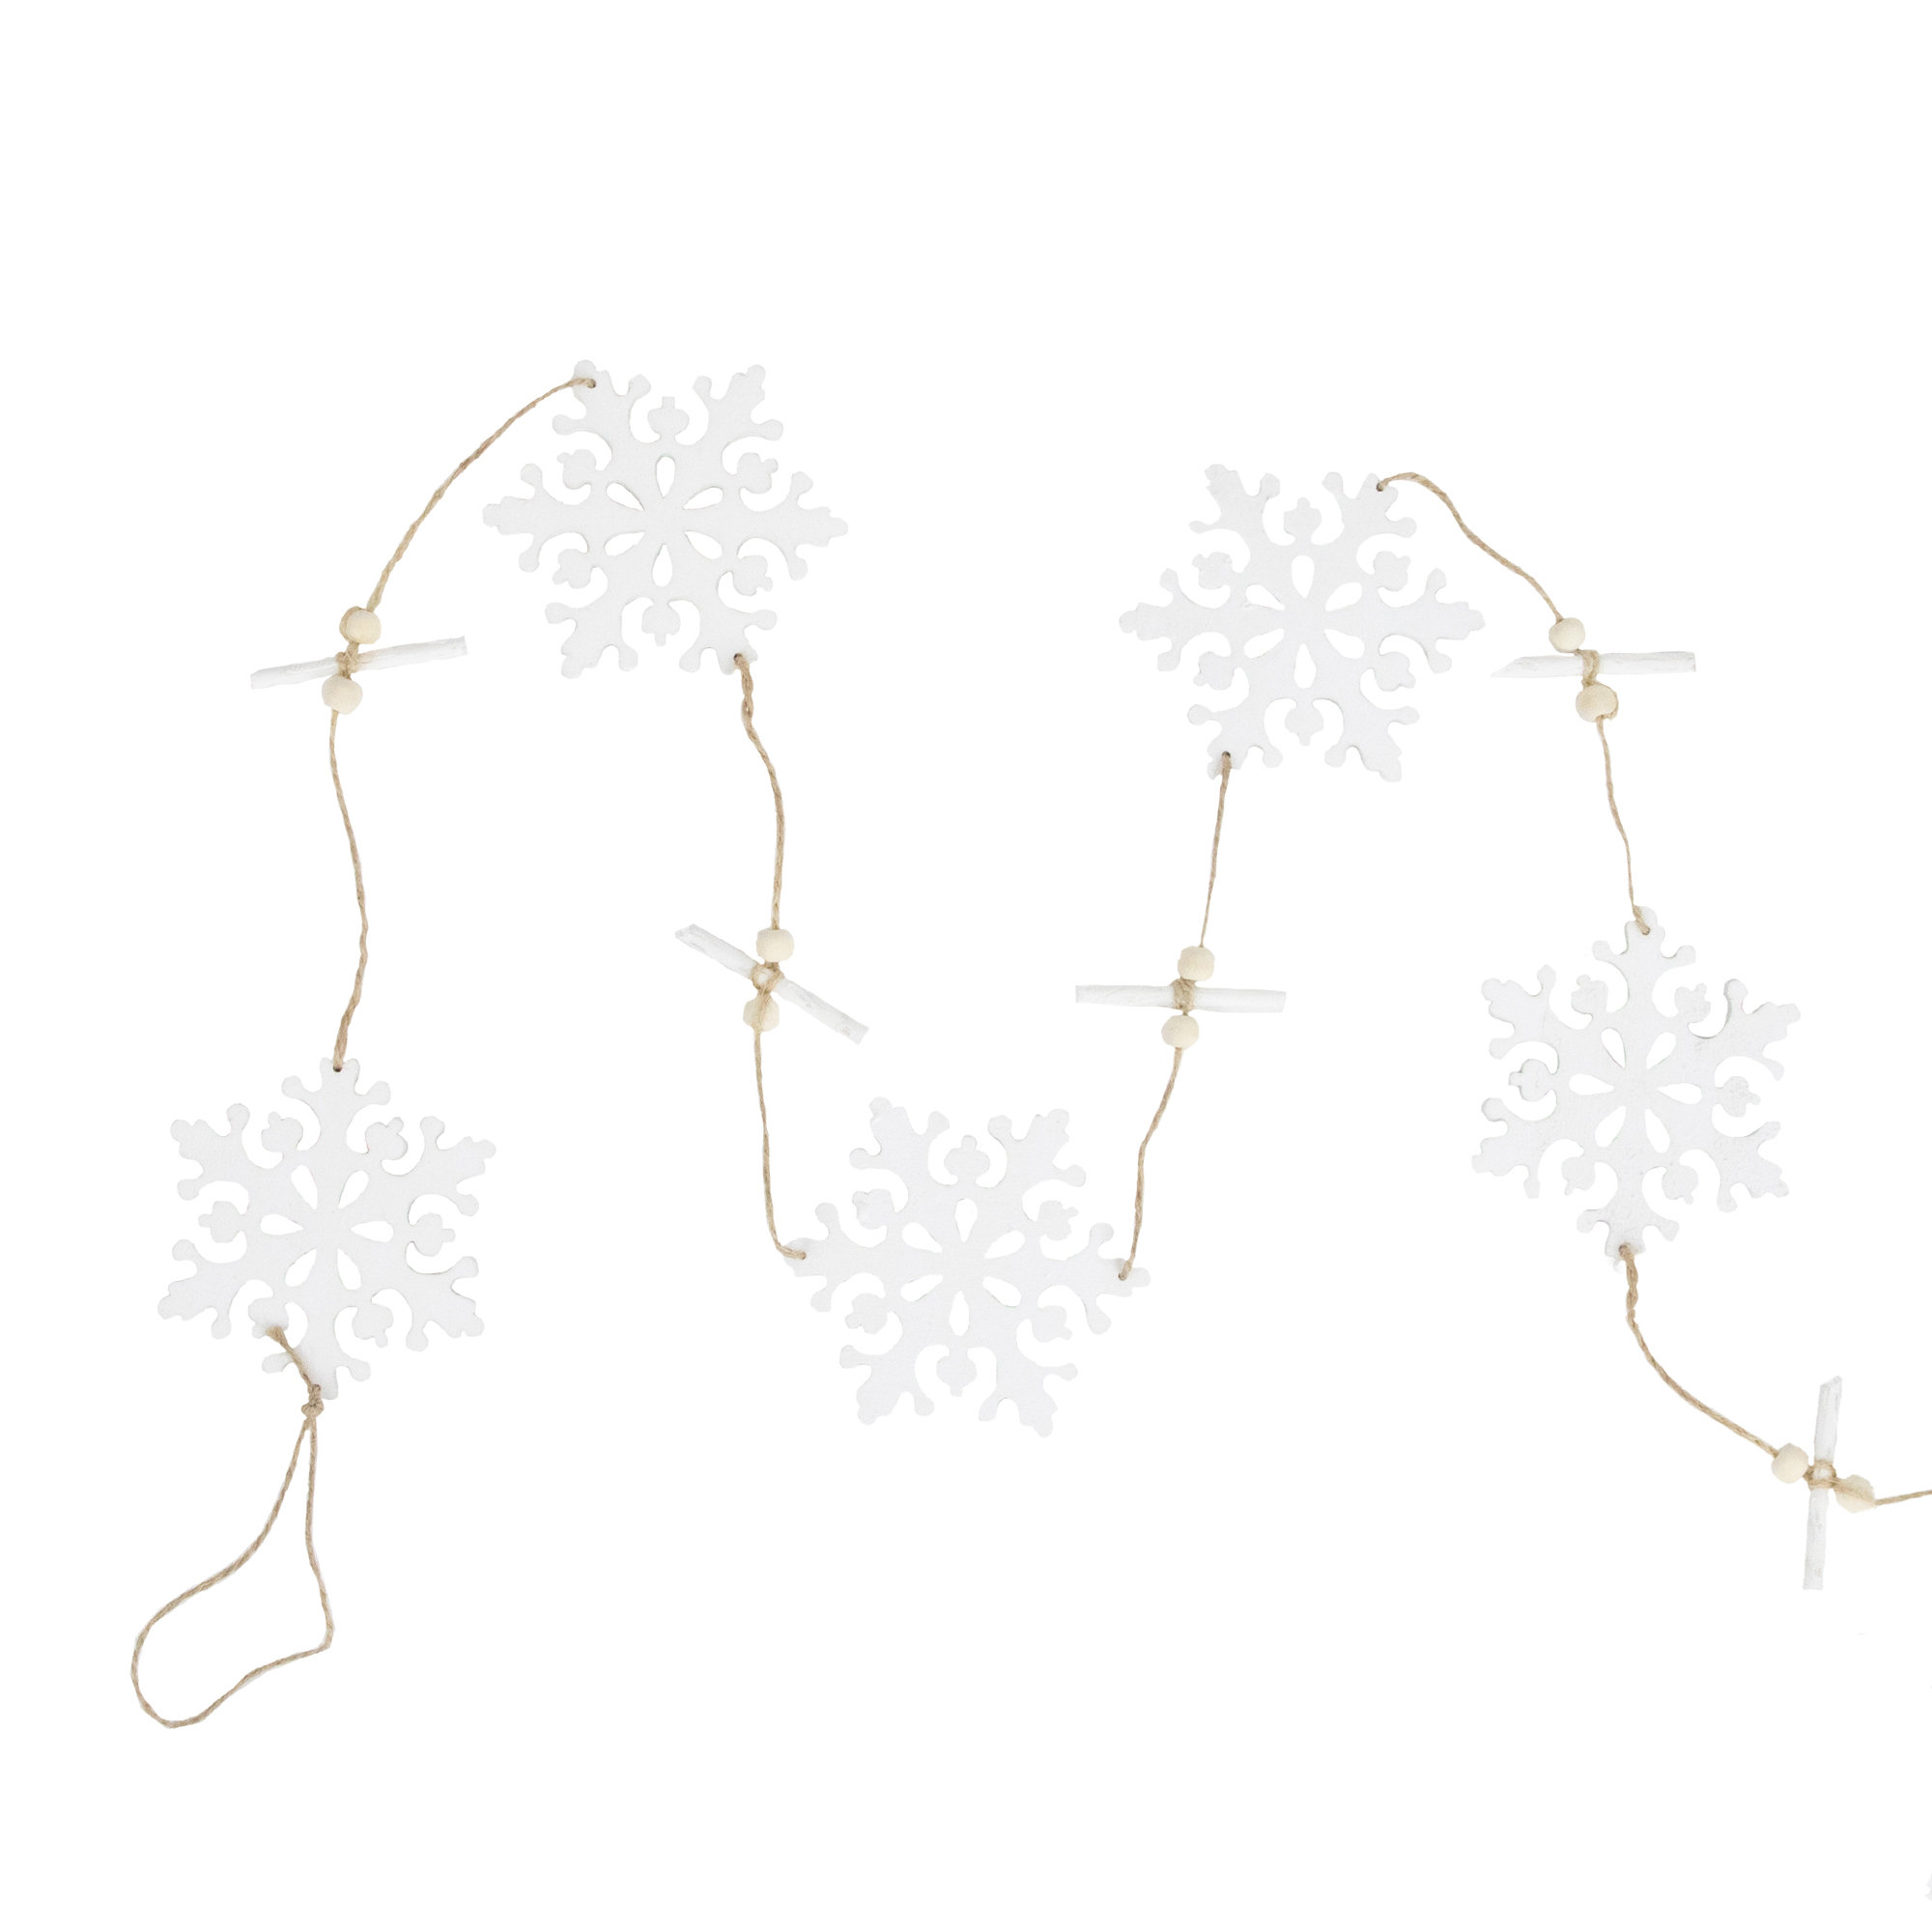 Northlight 4' White Snowflakes on Jute Rope Hanging Christmas